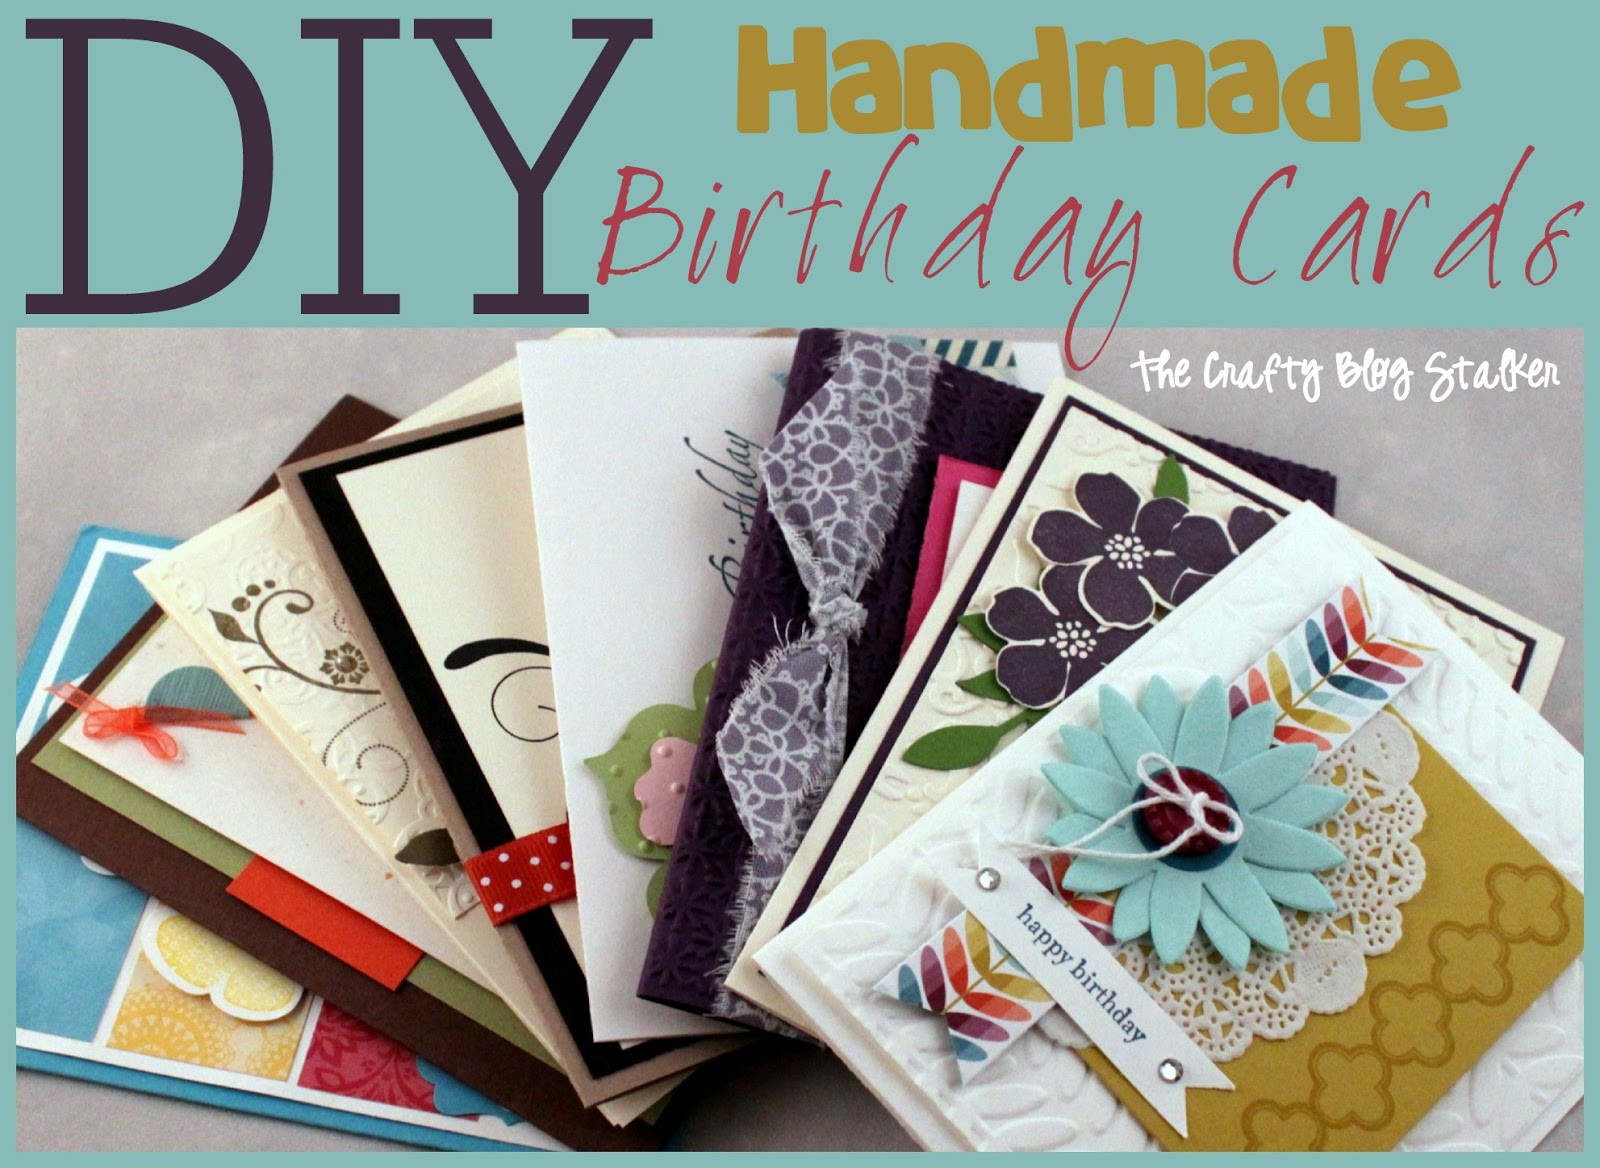 Diy Birthday Cards Ideas Handmade Birthday Card Ideas The Crafty Blog Stalker